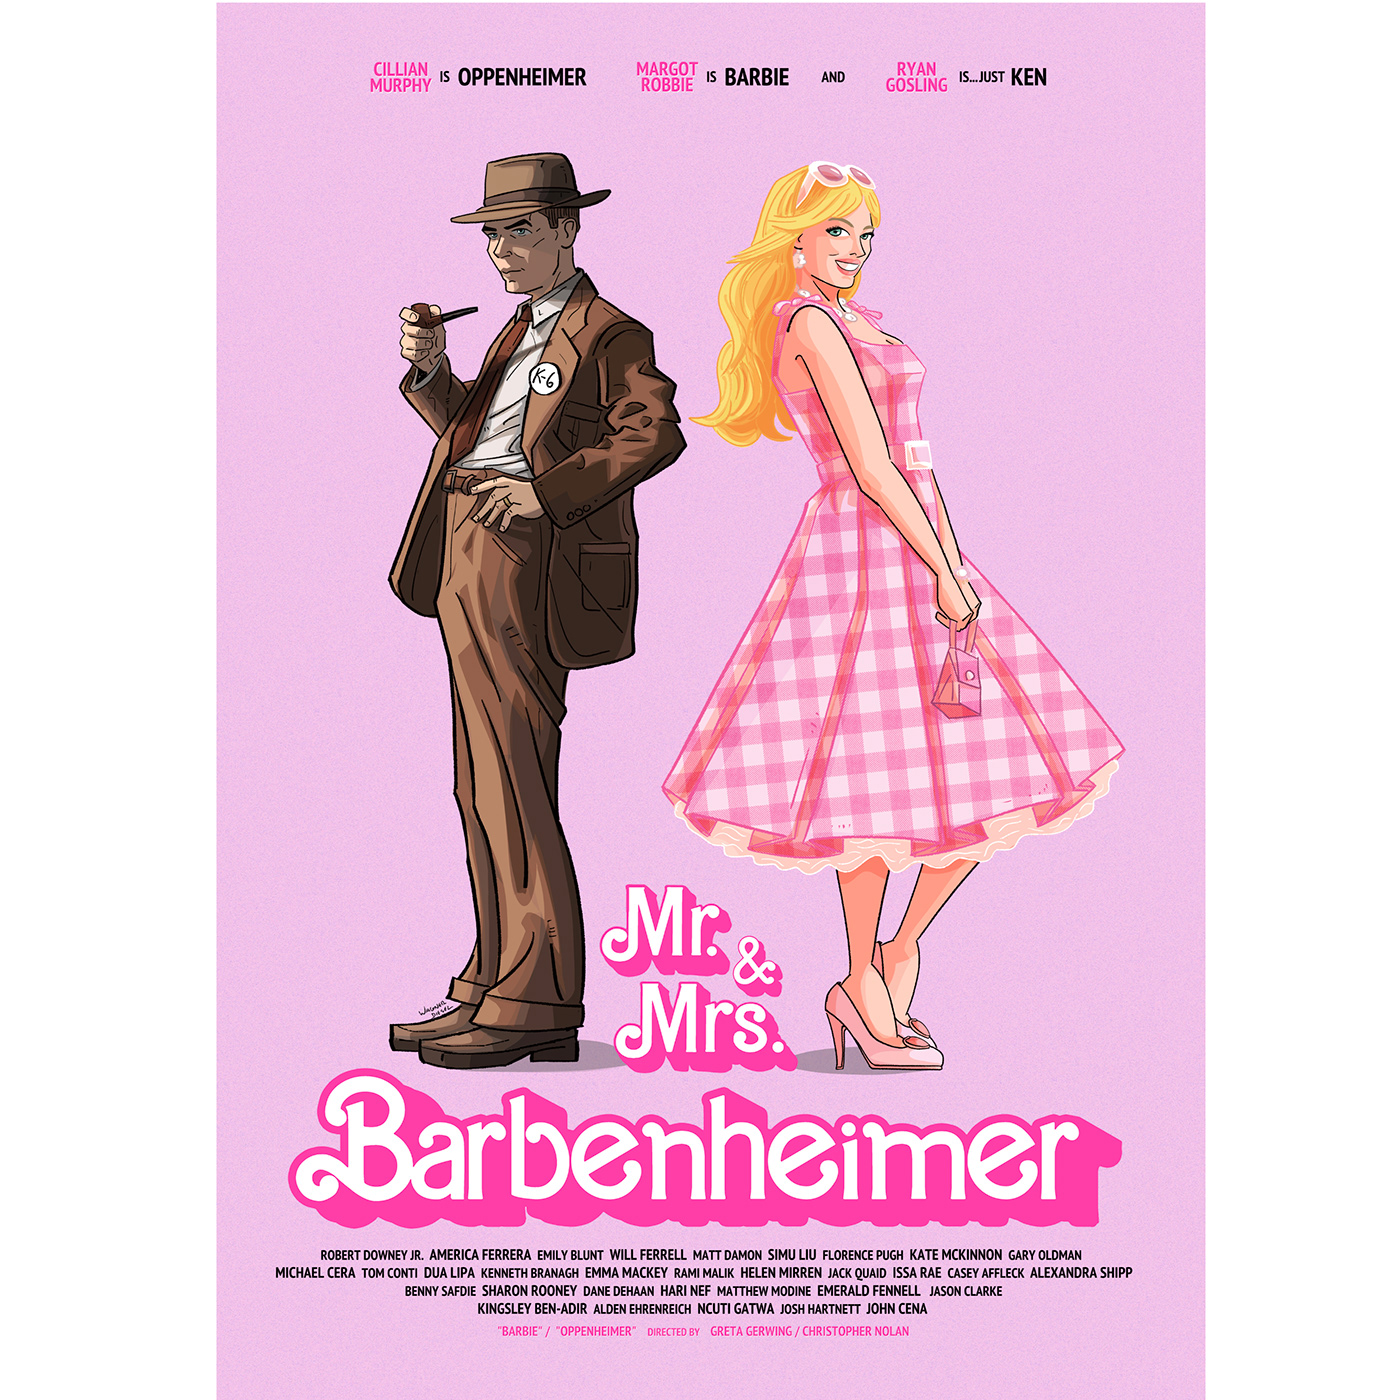 Barbenheimer barbie doll pink oppenheimer Poster Design Advertising  marketing   movie poster fanart